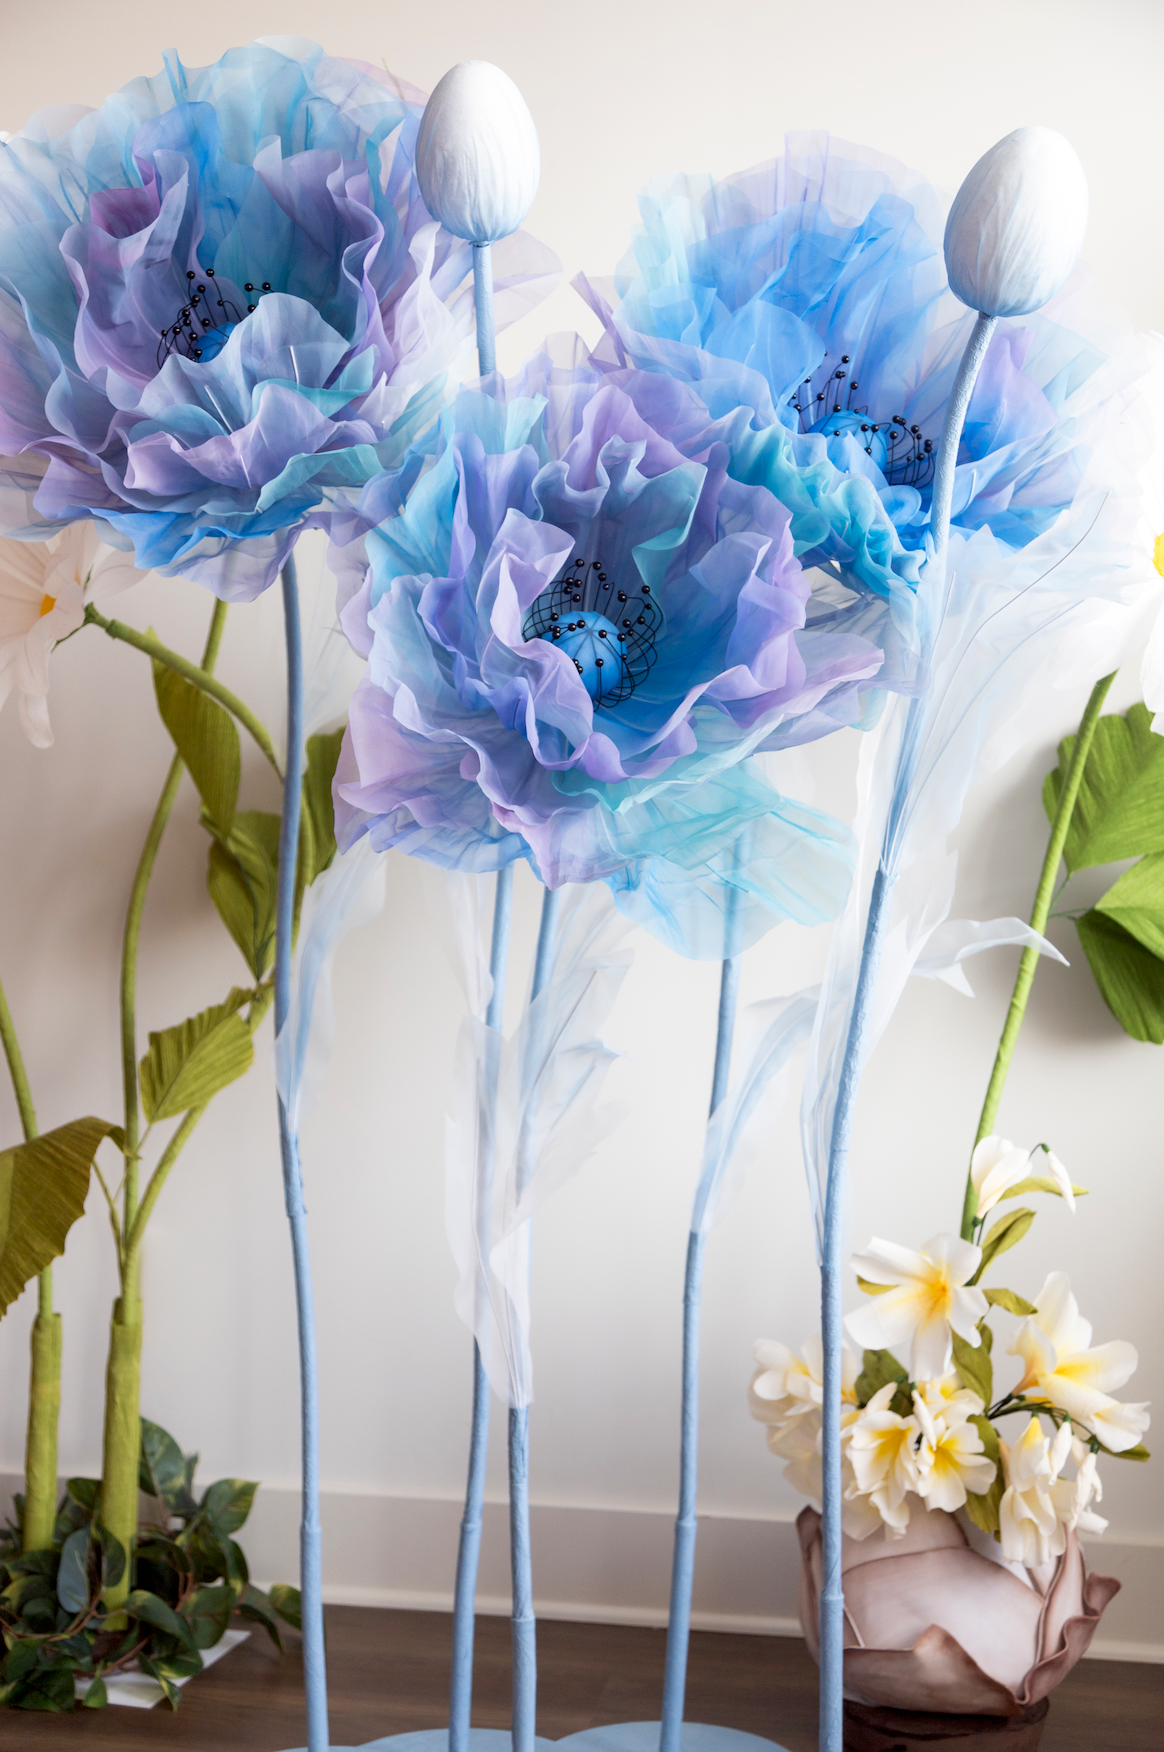 Luxury event decor - Giant Blue Flowers Handmade of Silk